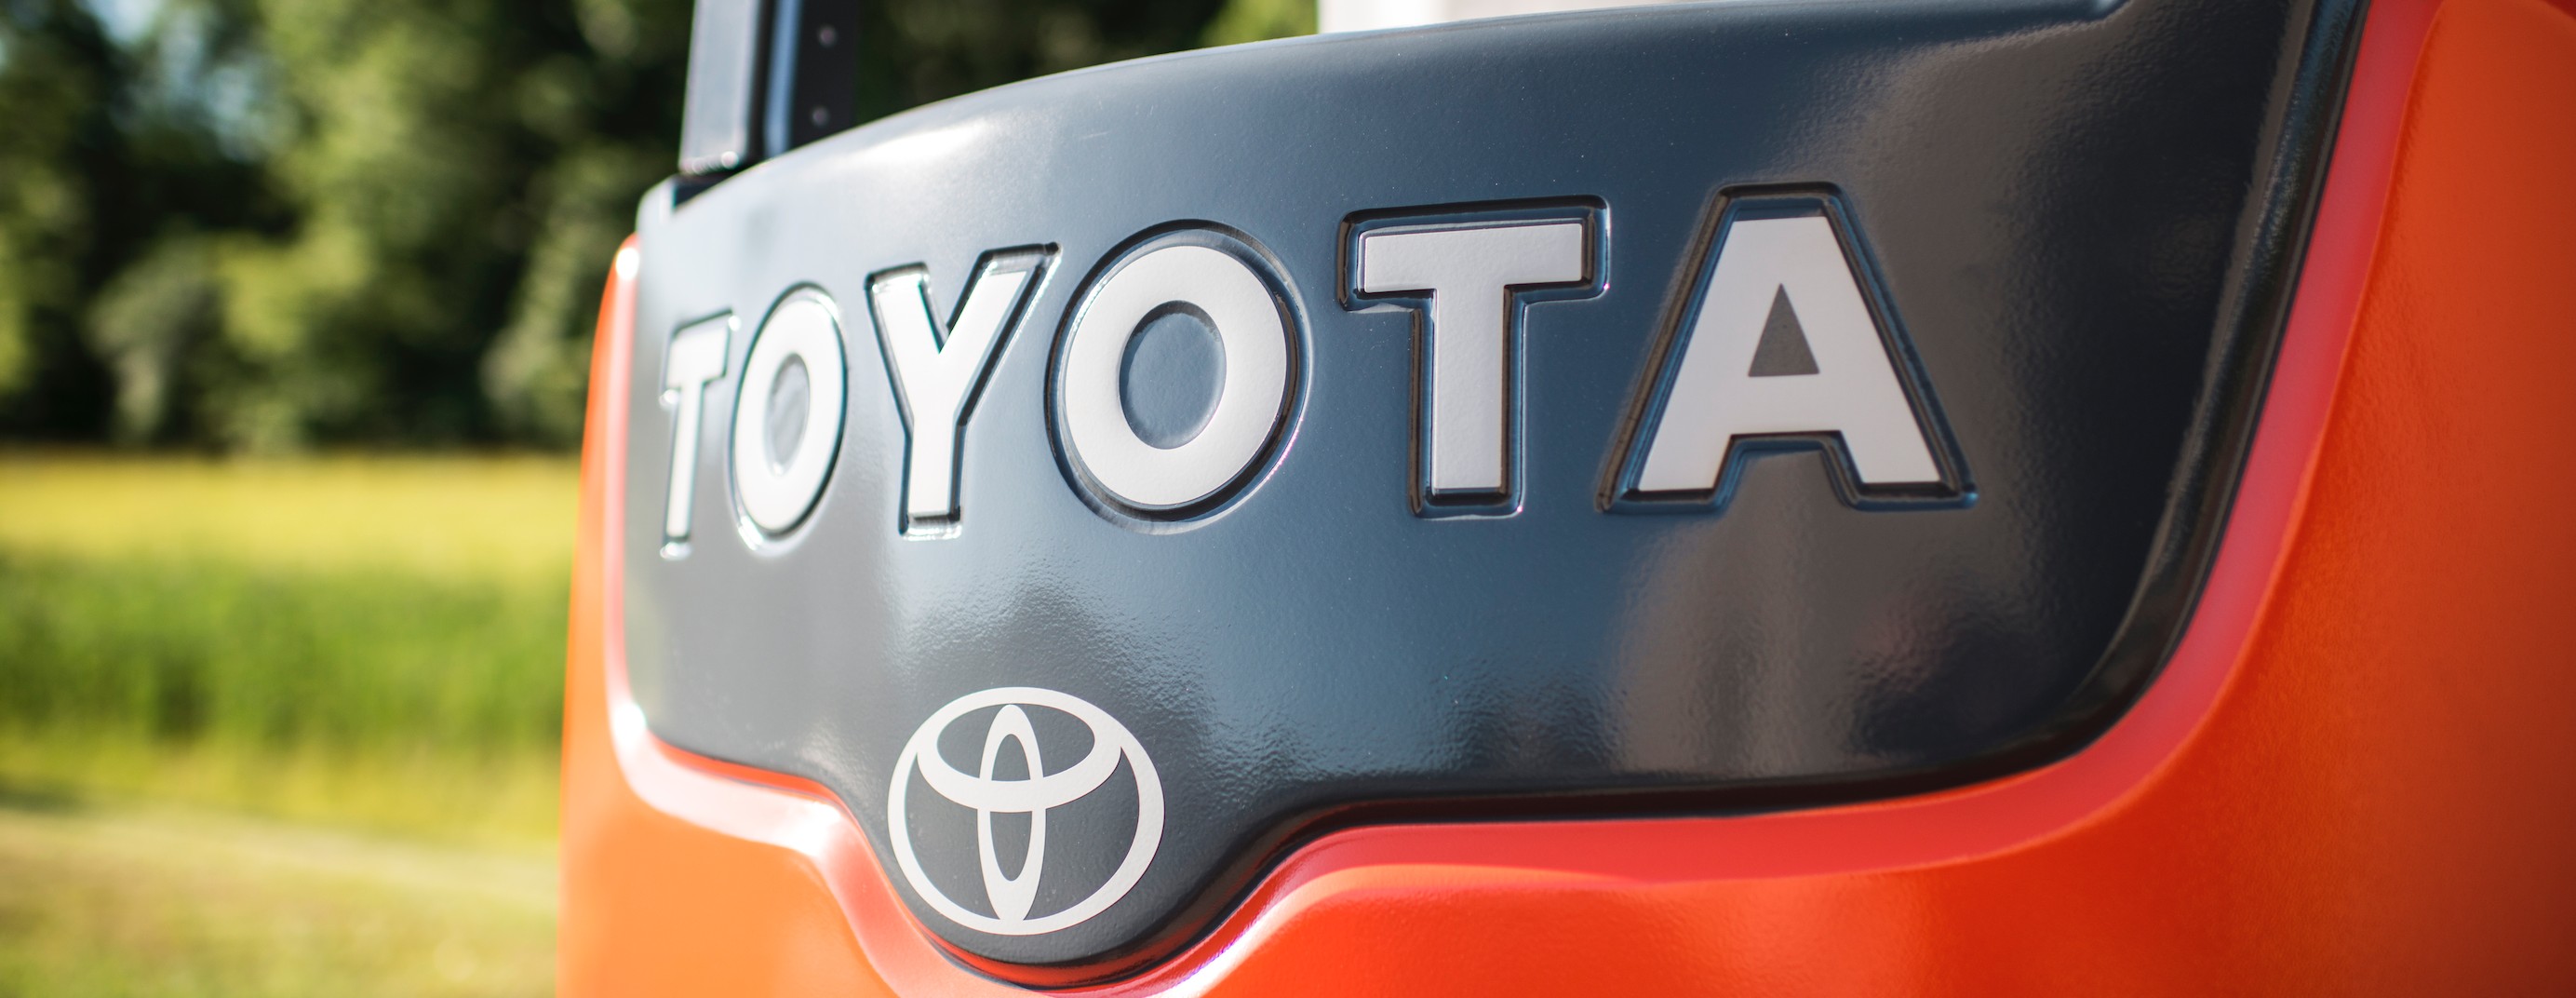 Toyota Material Handling Linkedin